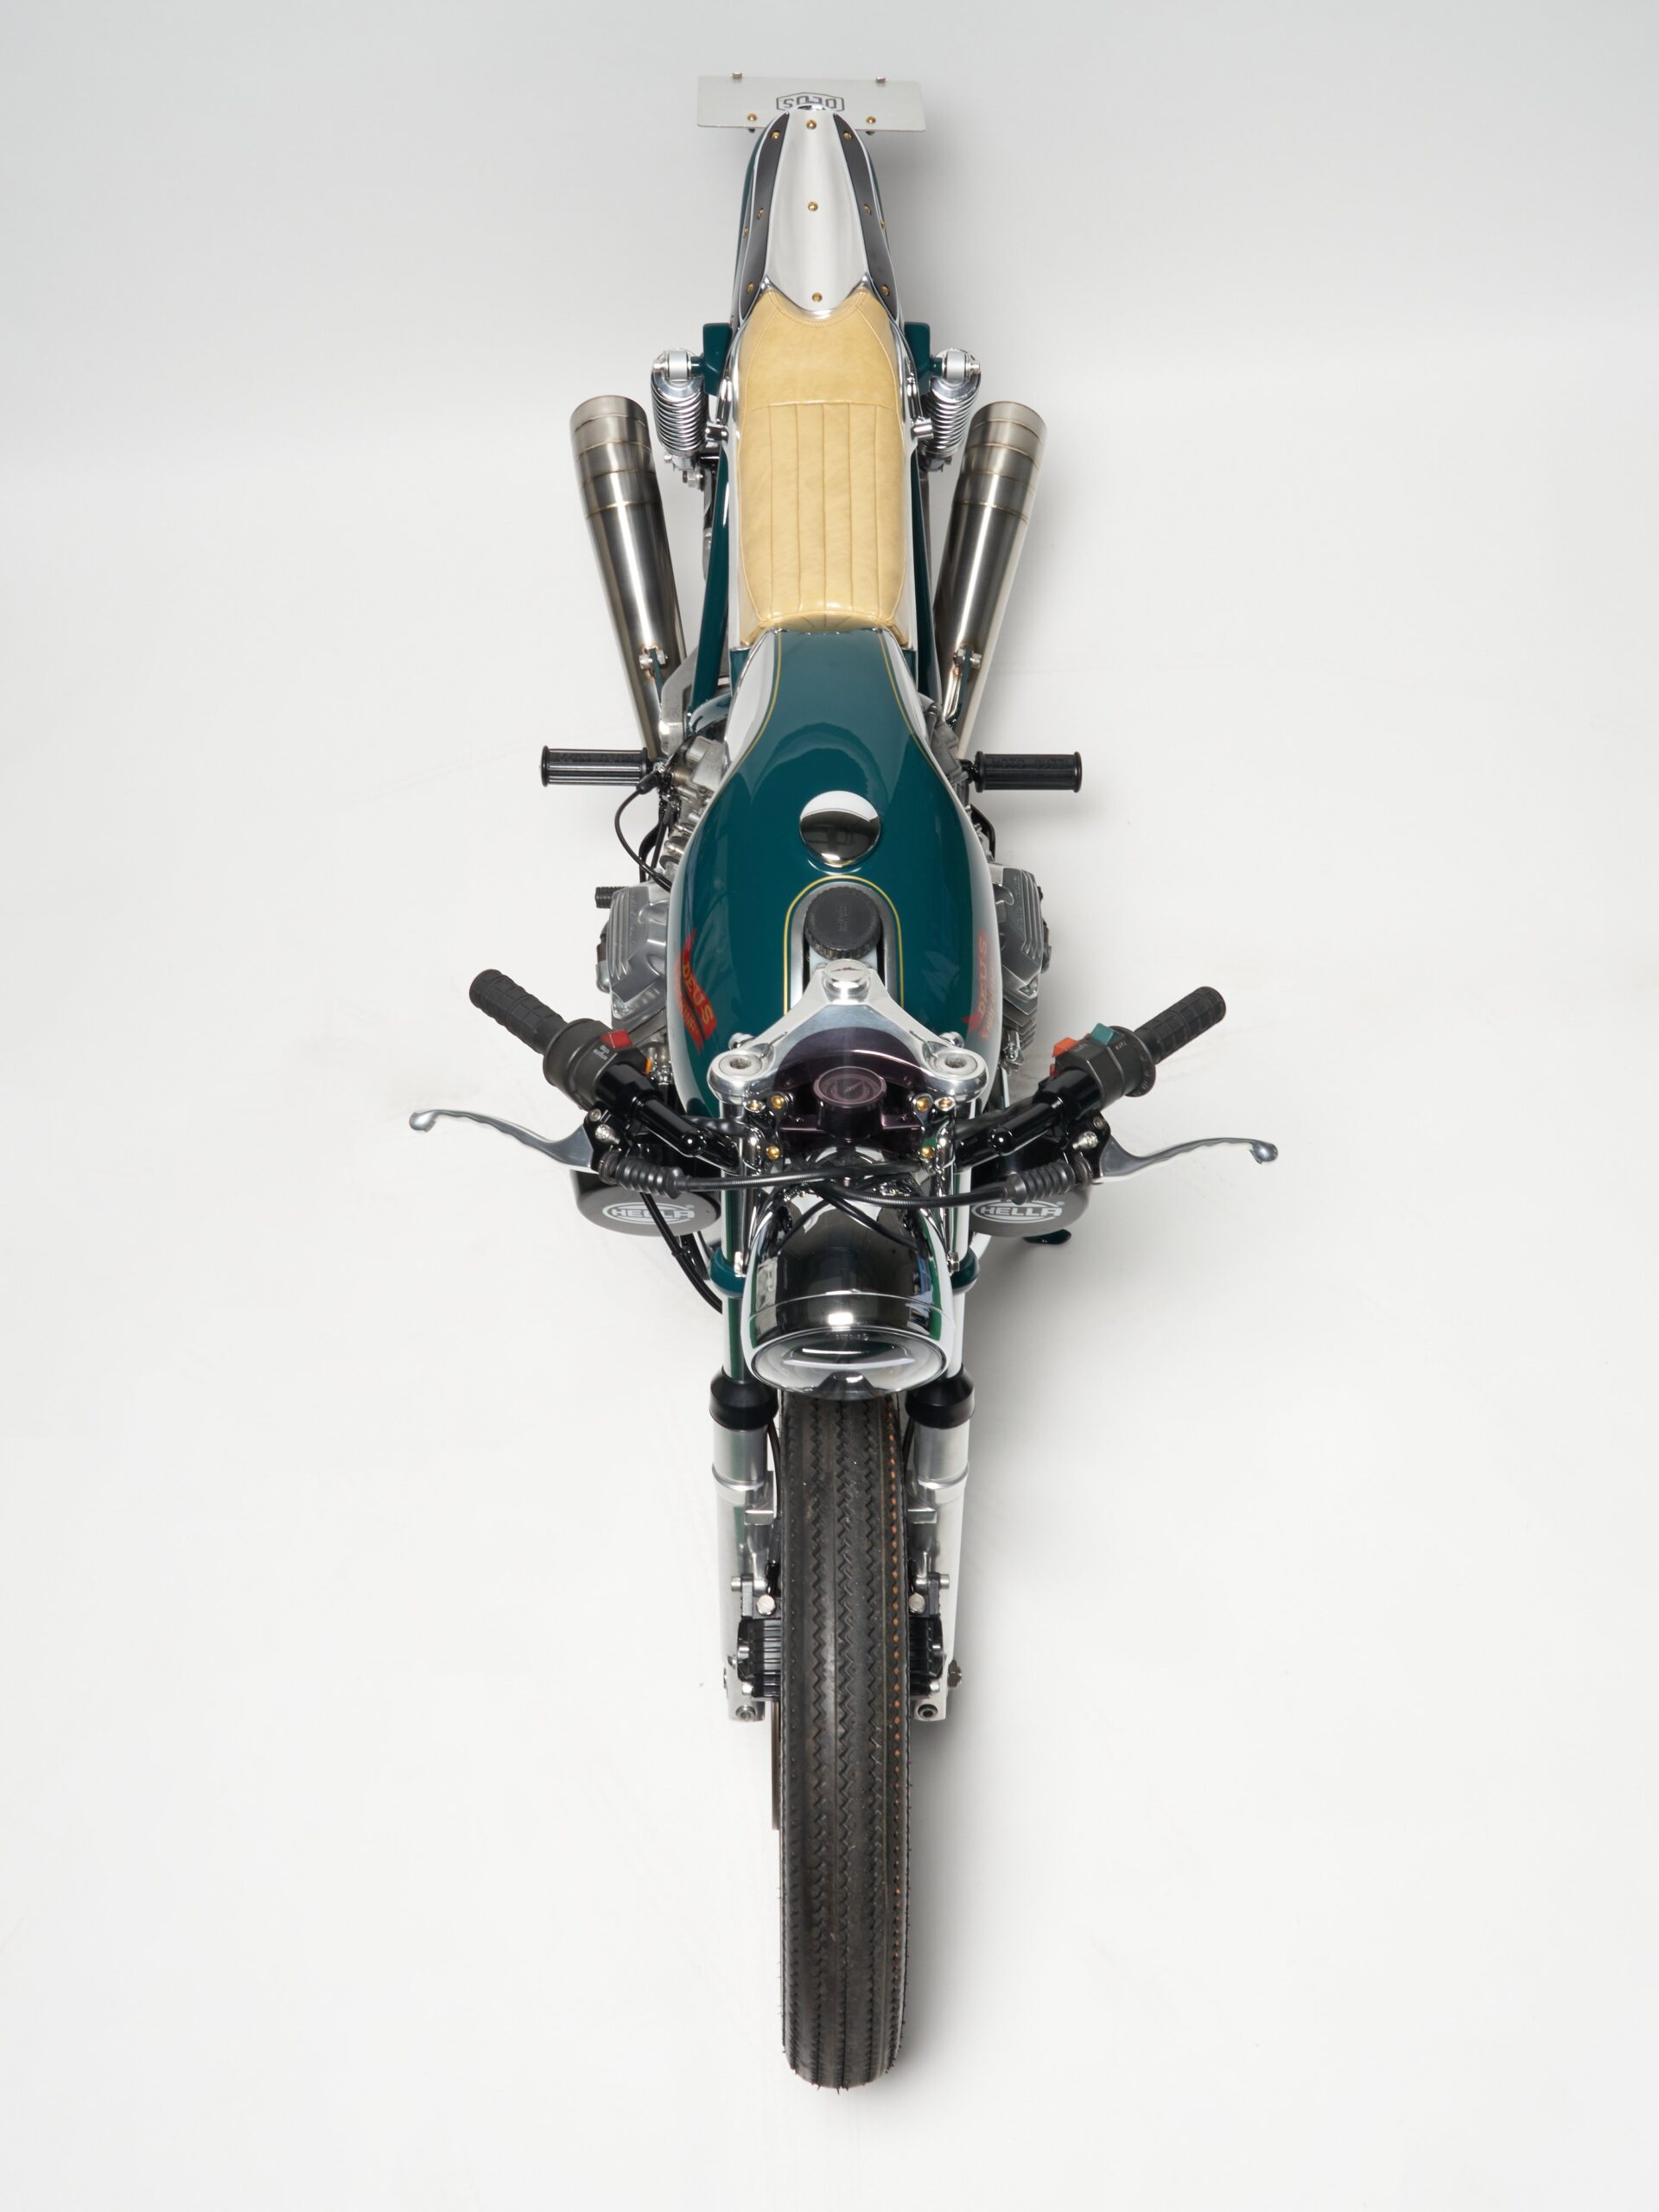 Moto Guzzi "Beretta" Cafe Racer by Dues Japan